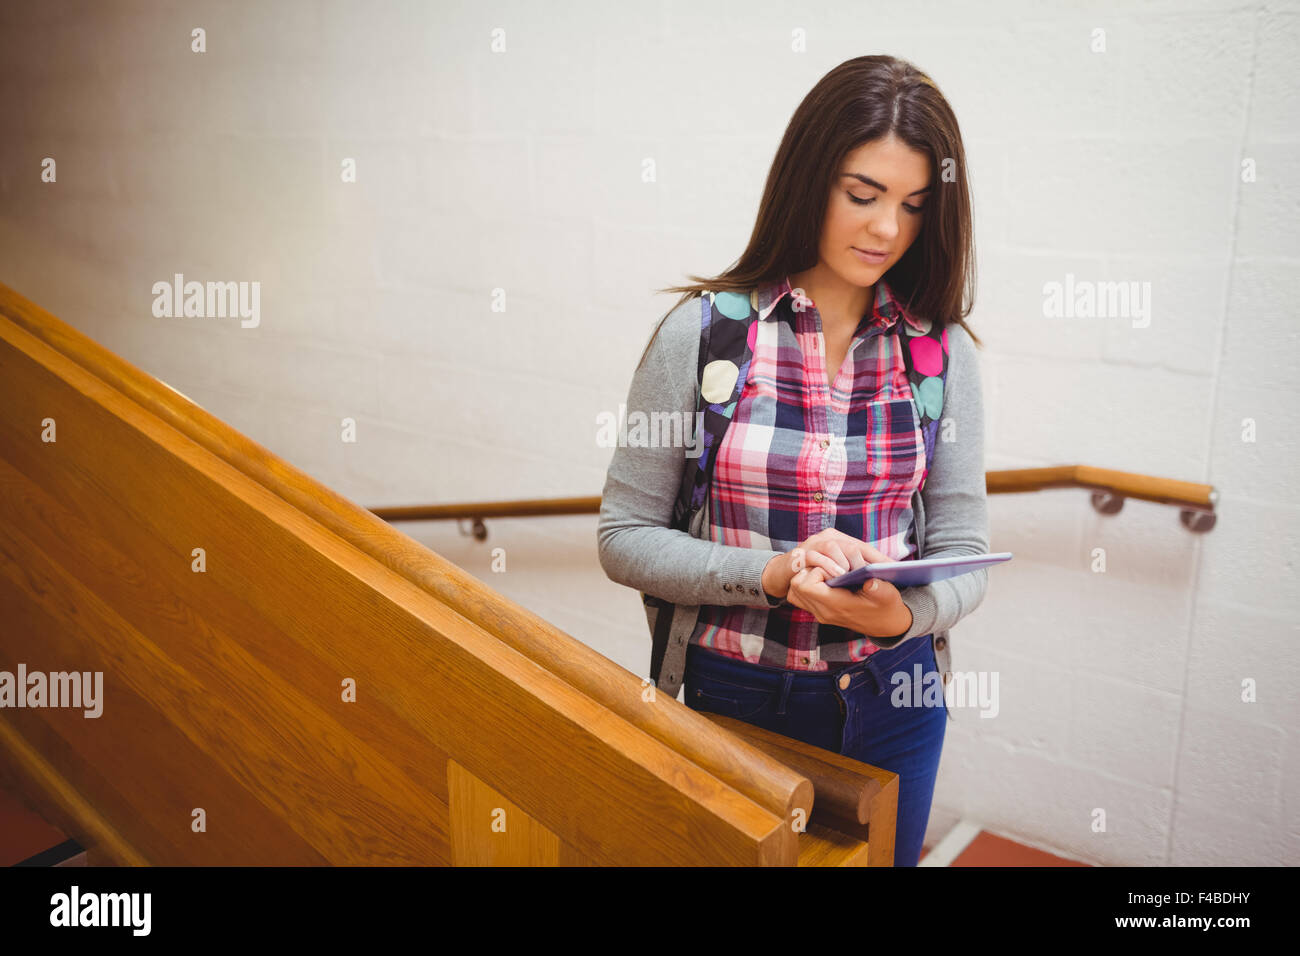 Female student using digital tablet Stock Photo